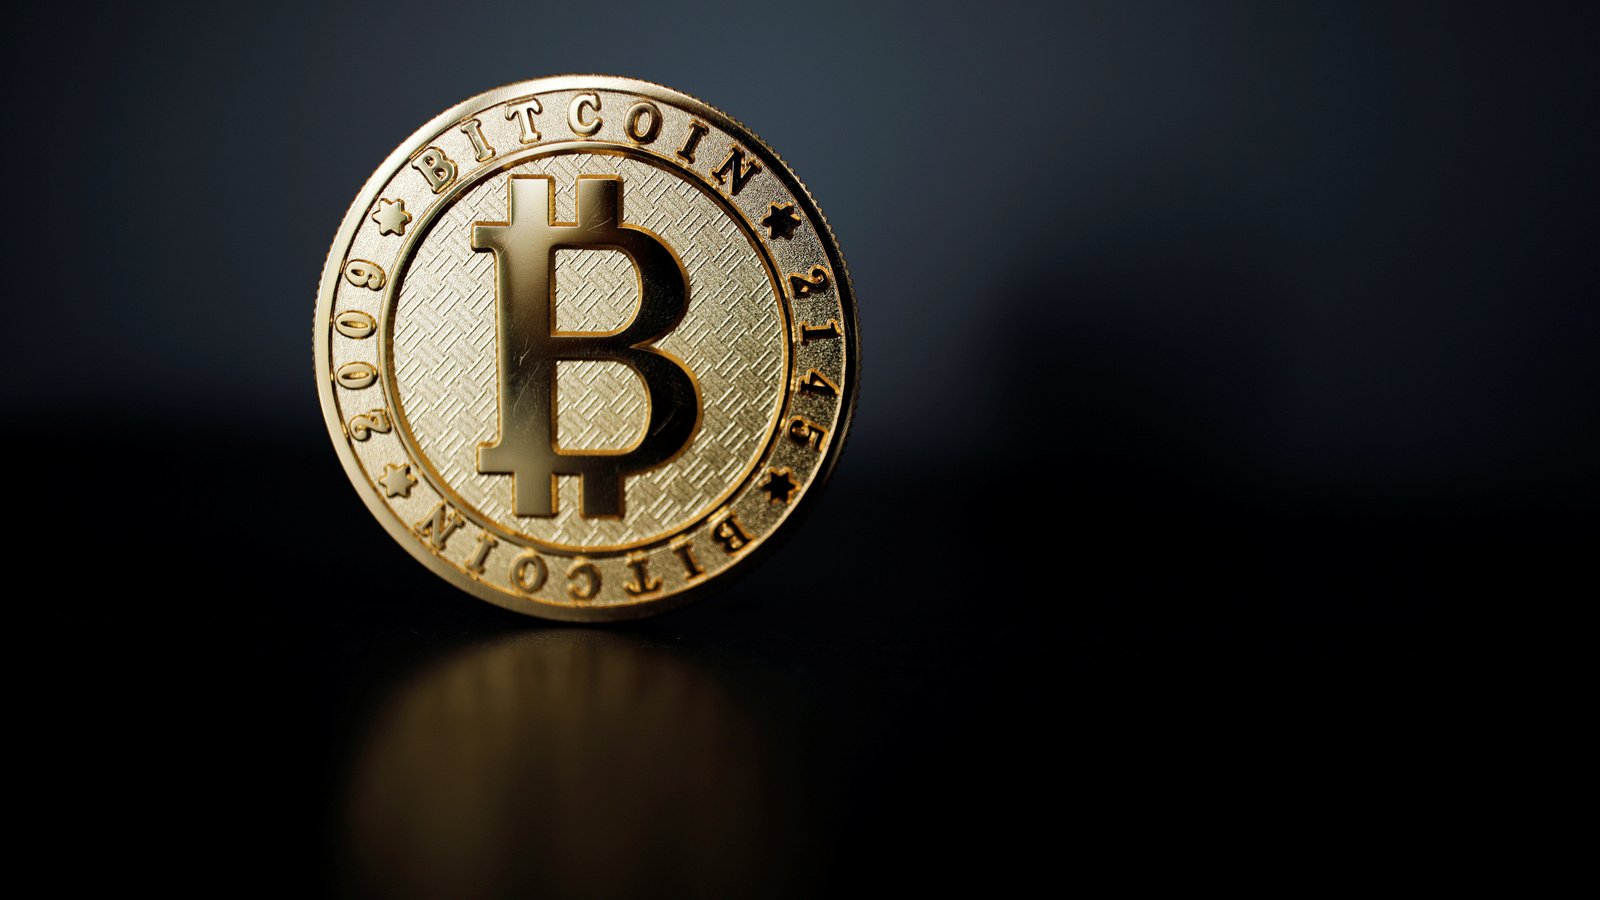 digital currency exchange nicehash says bitcoin worth nearly $64